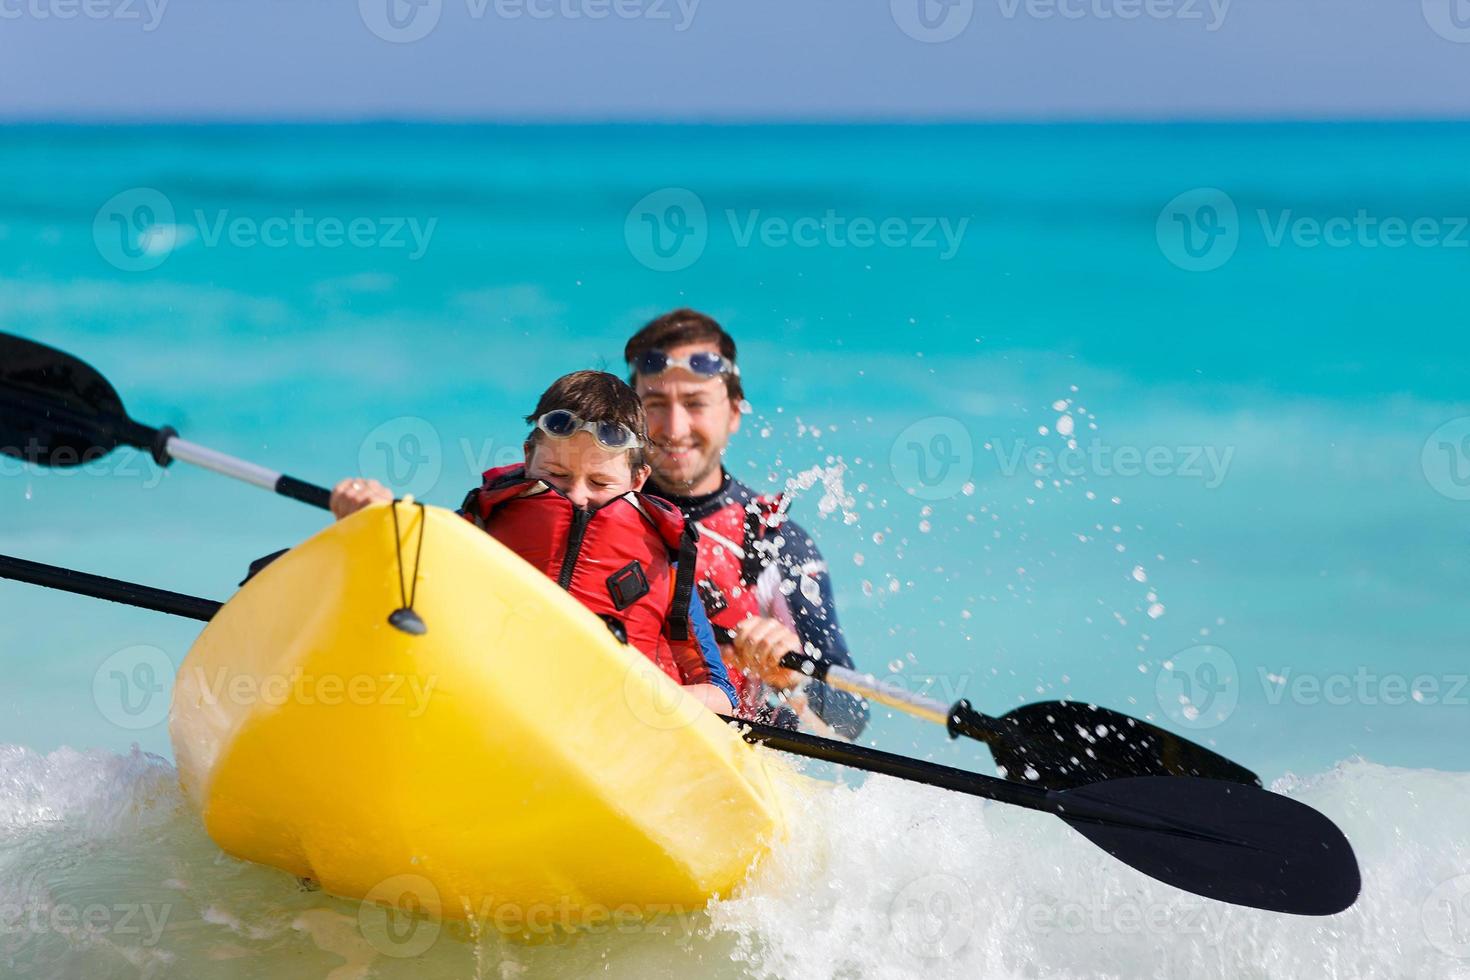 padre e hijo en kayak foto